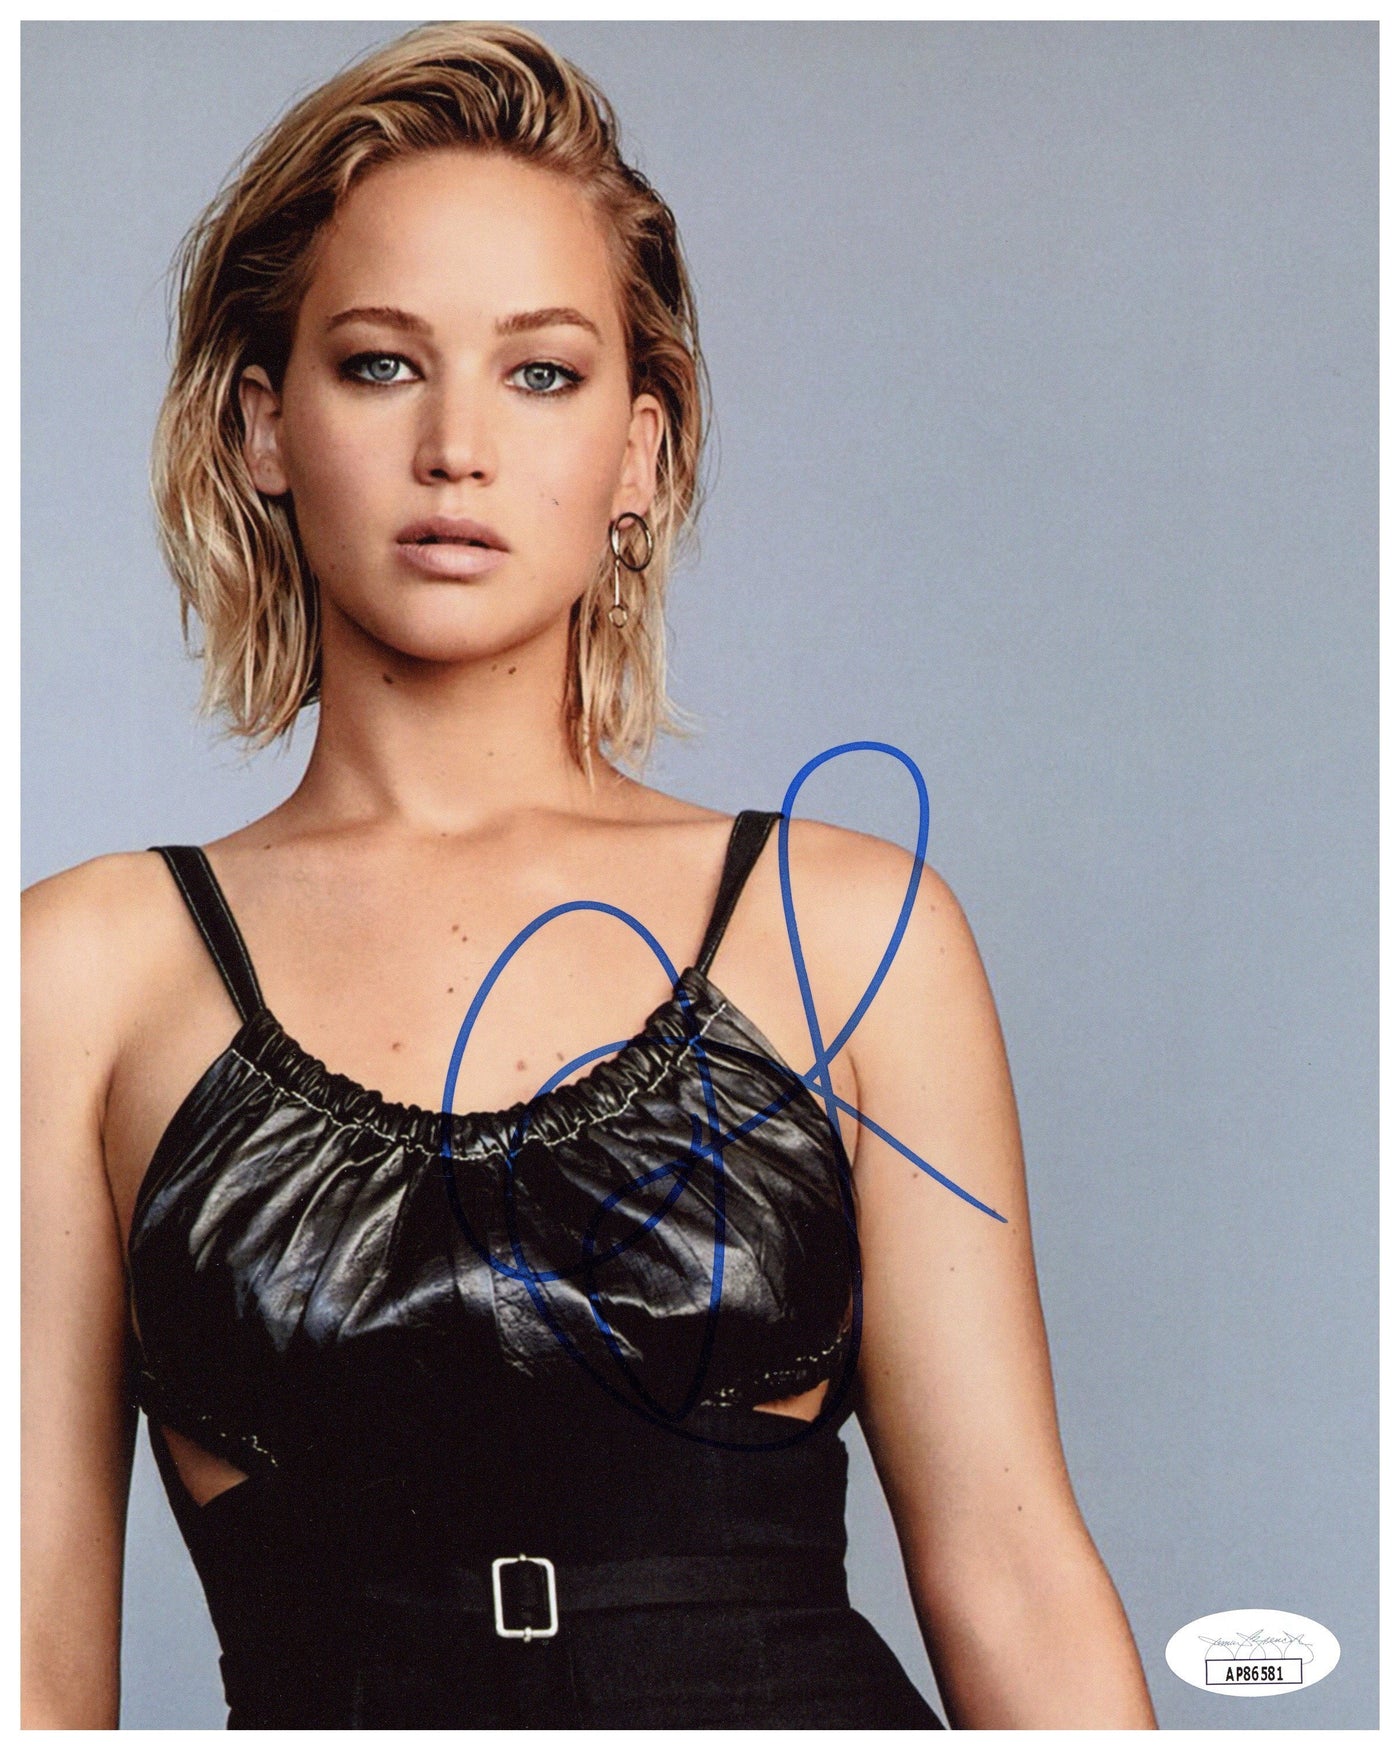 Jennifer Lawrence Signed 8x10 Photo The Hunger Games Autographed JSA COA